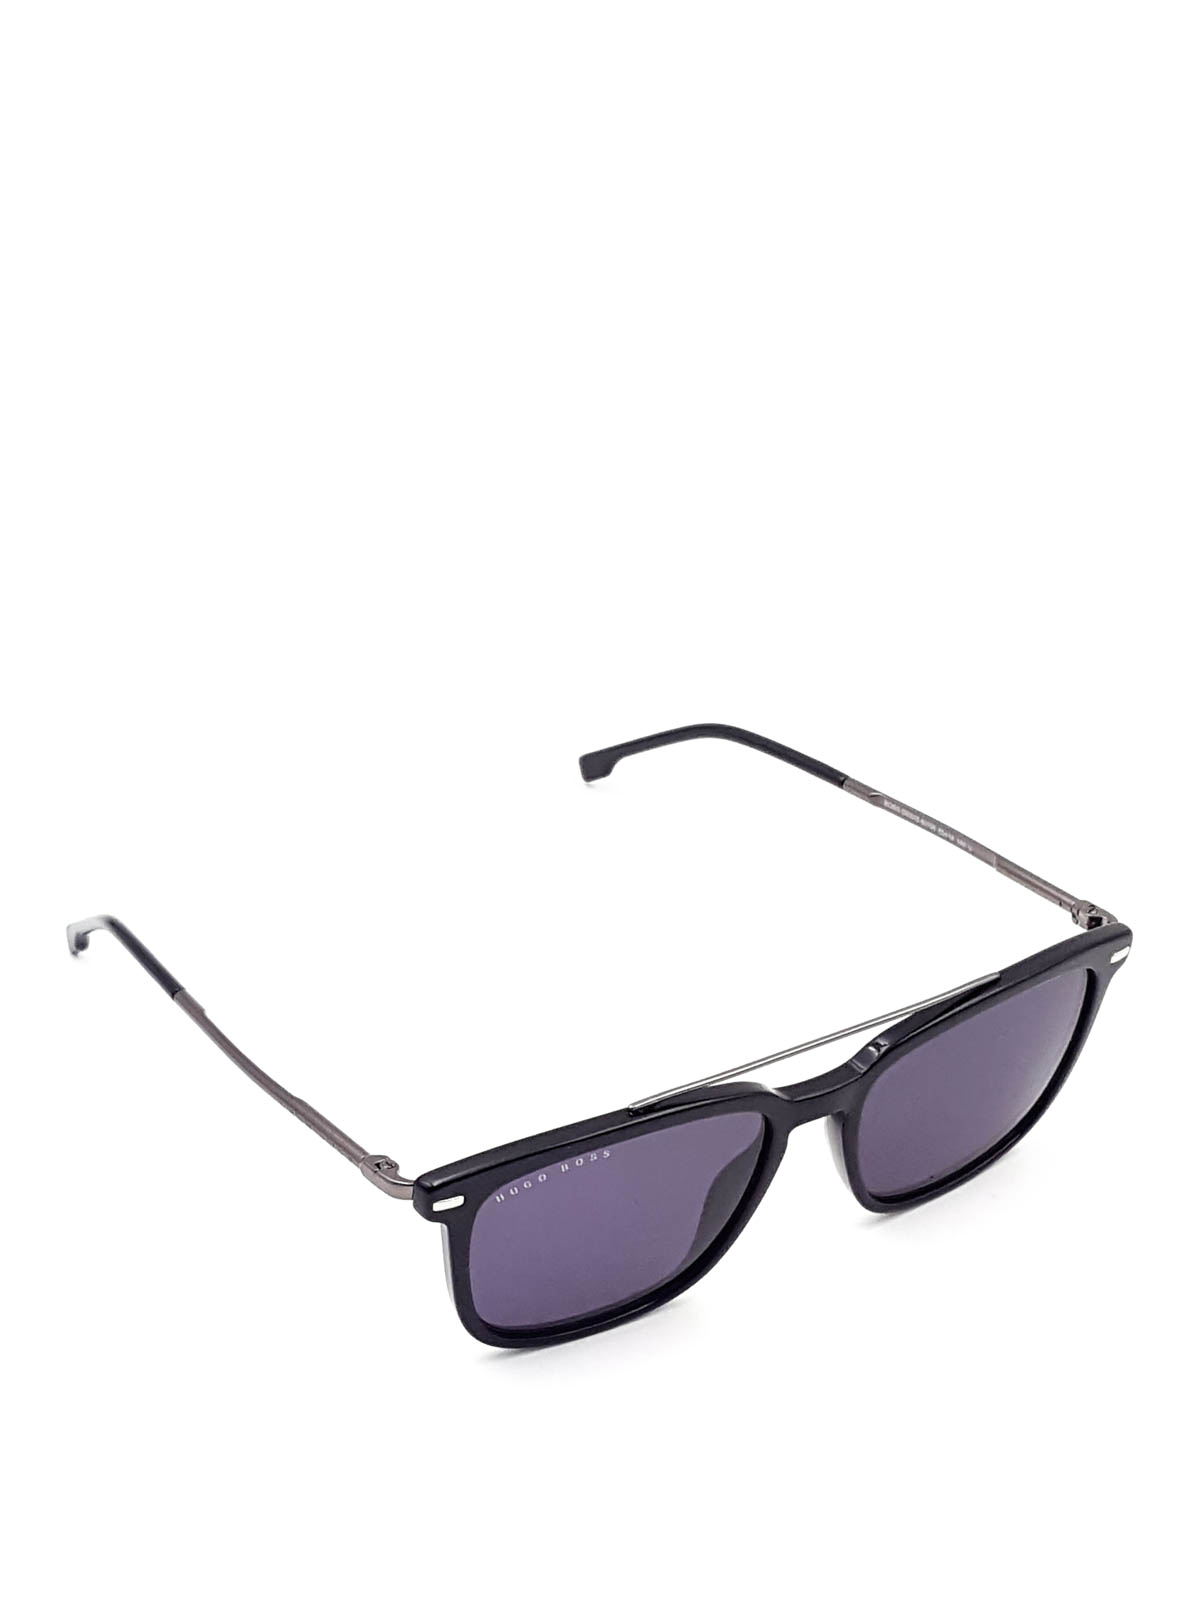 Hugo Boss - Double bridge sunglasses 